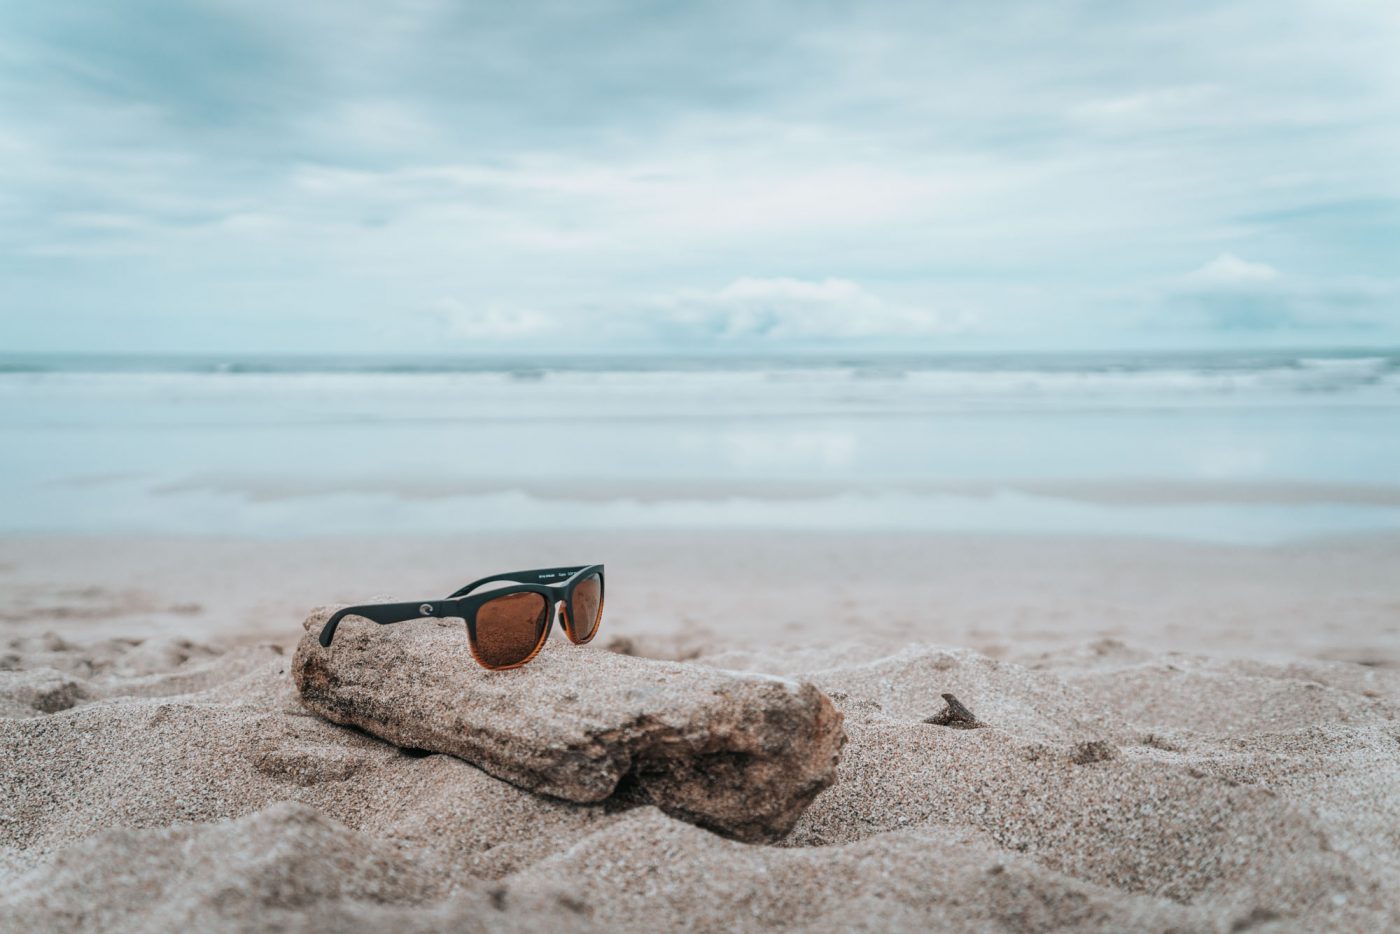 Sunglasses on the beach, Costa Rica